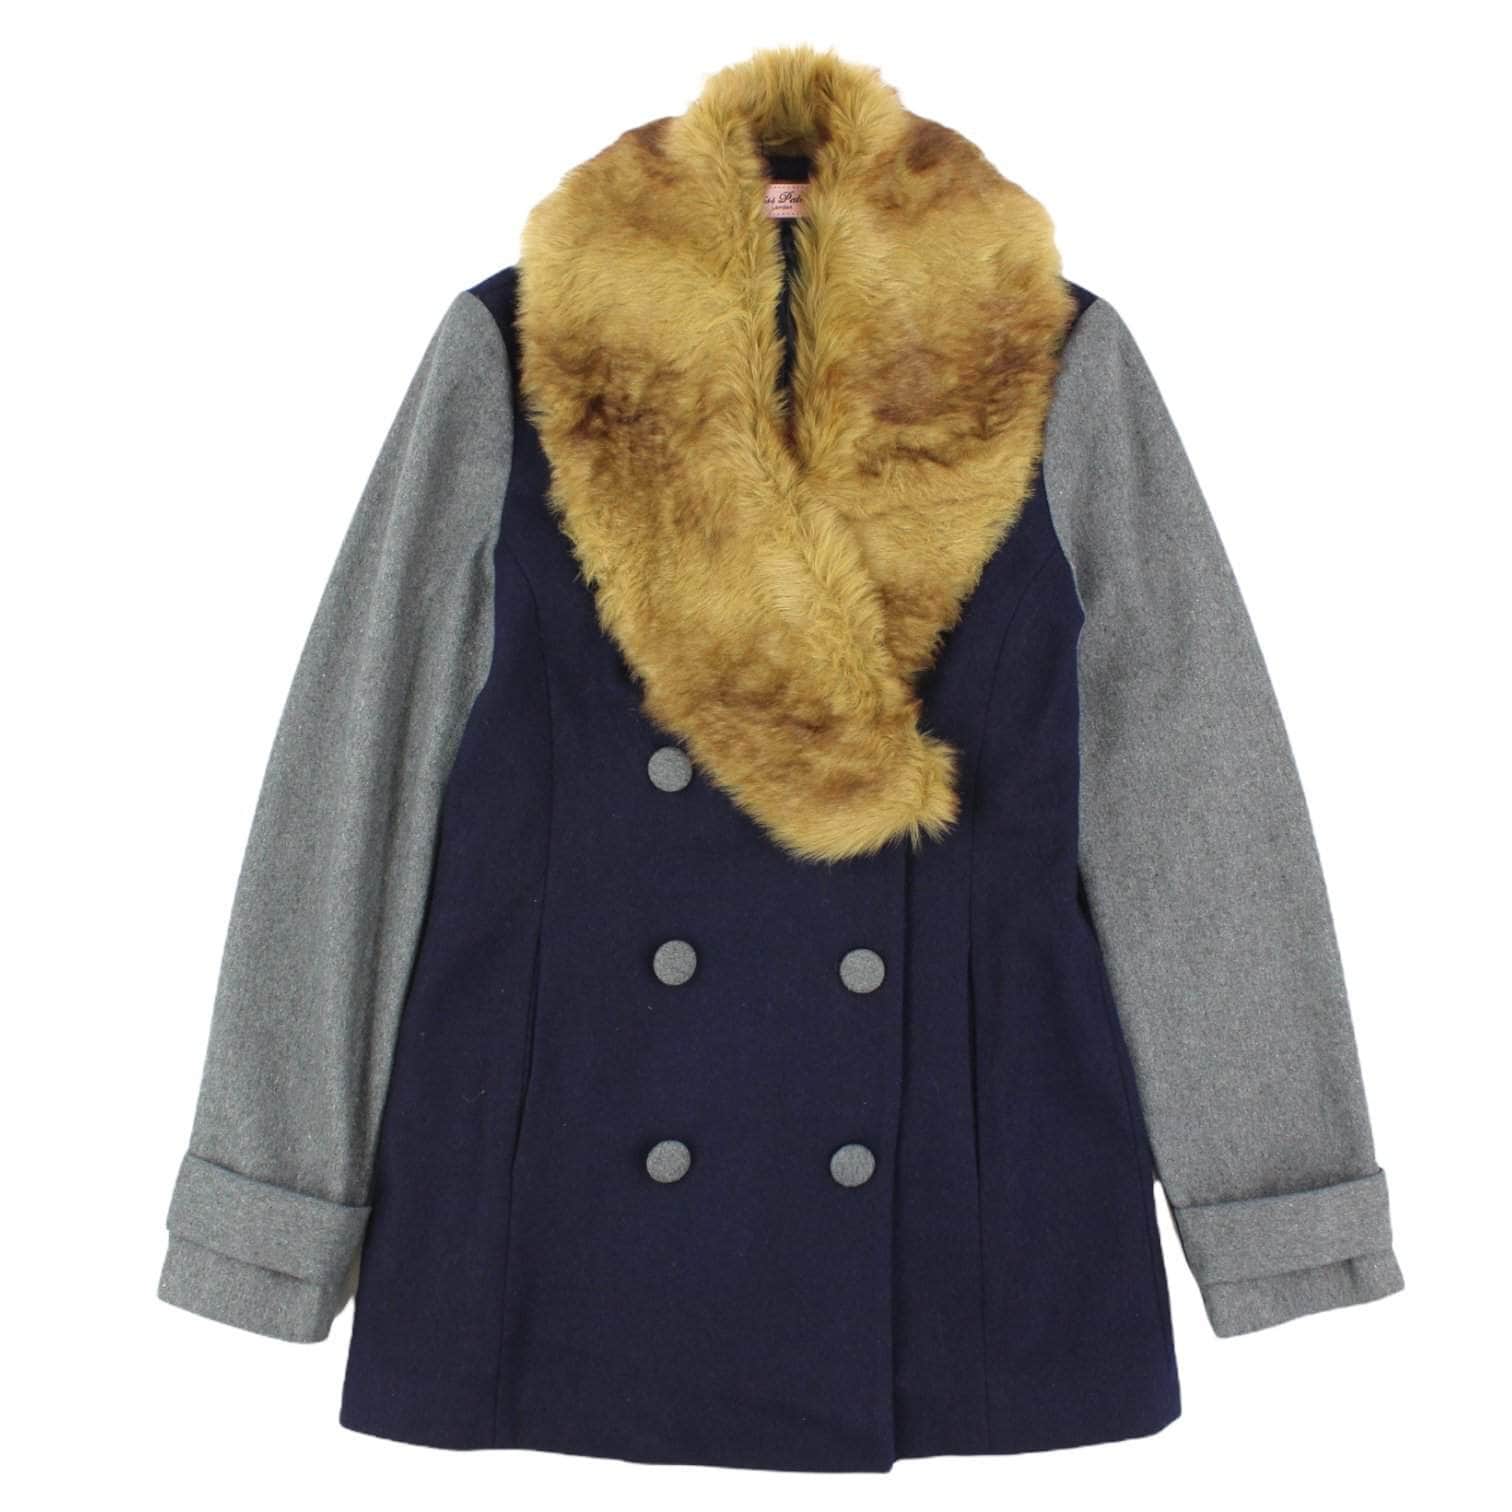 Miss Patina Faux Fur Navy & Grey Coat